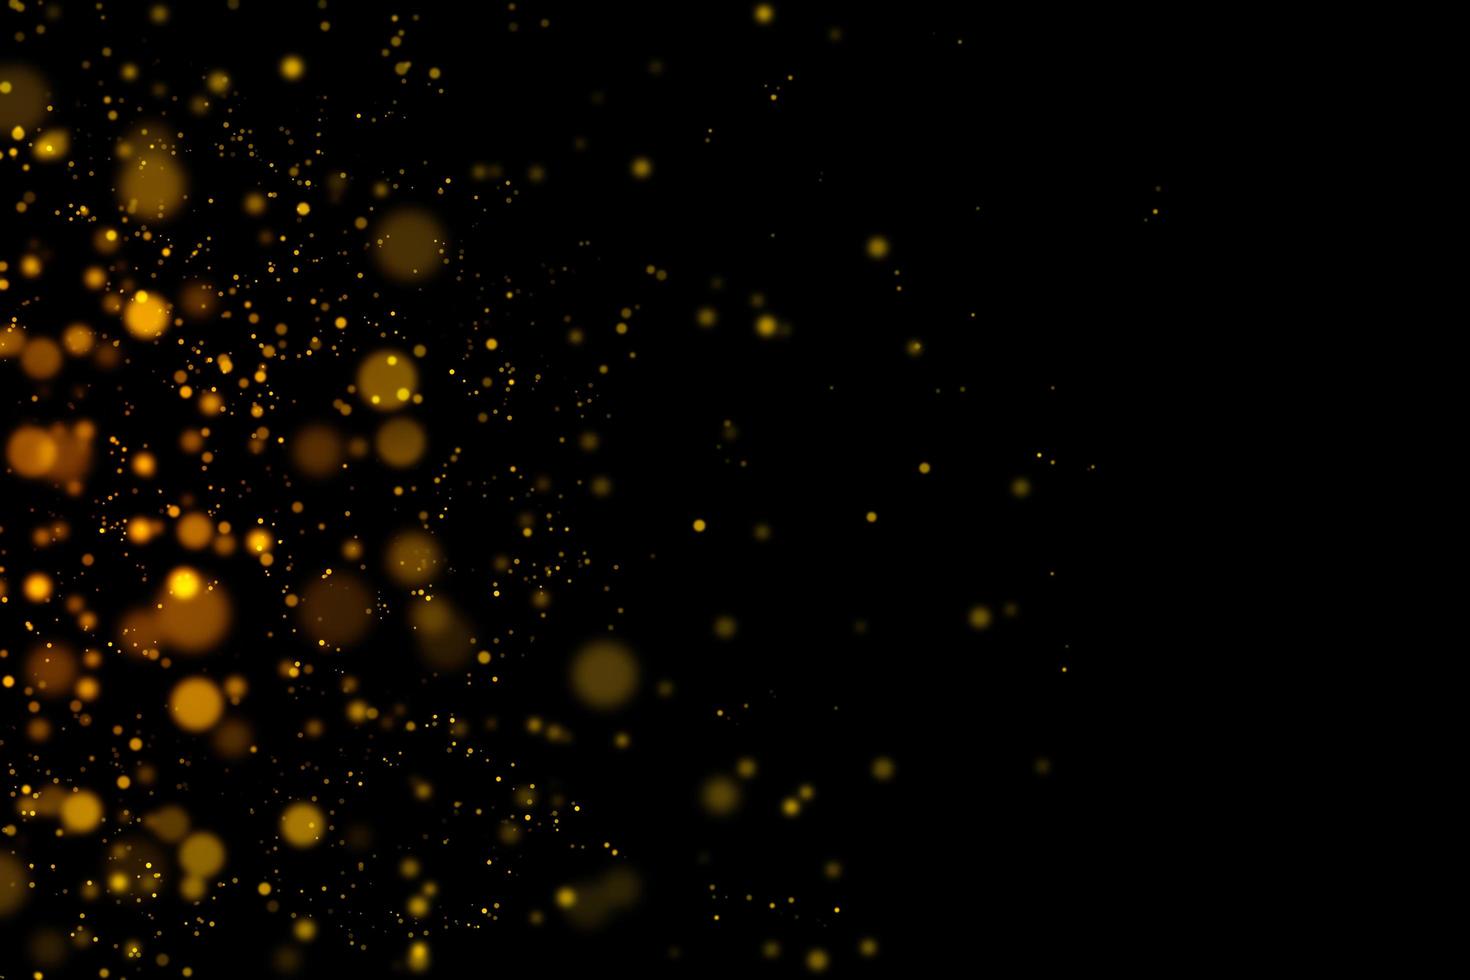 Blurred gold circles on black background photo